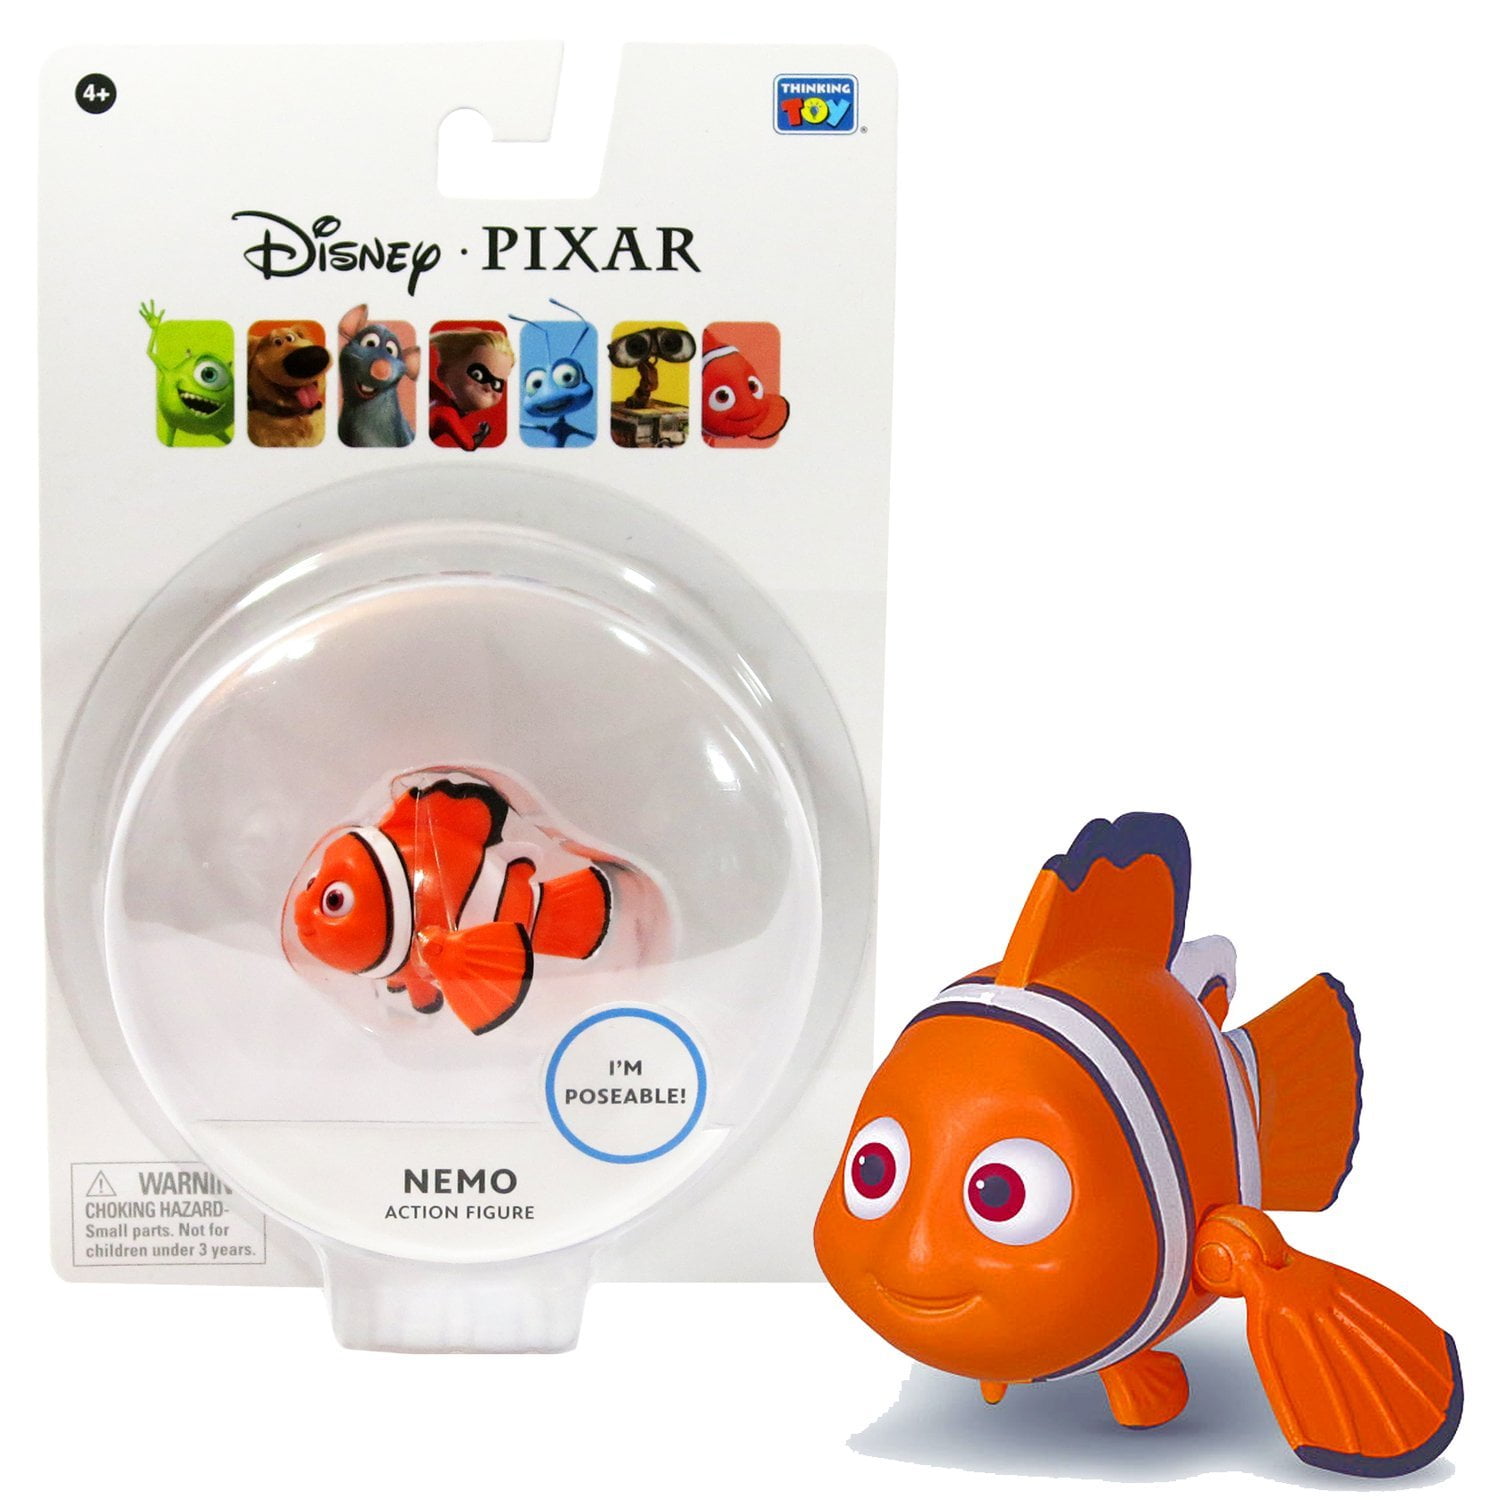 Details about   McDonald's Disney Pixar Finding Nemo 2003 Nemo 4 inch Clown Fish Toy NEW IN BAG 